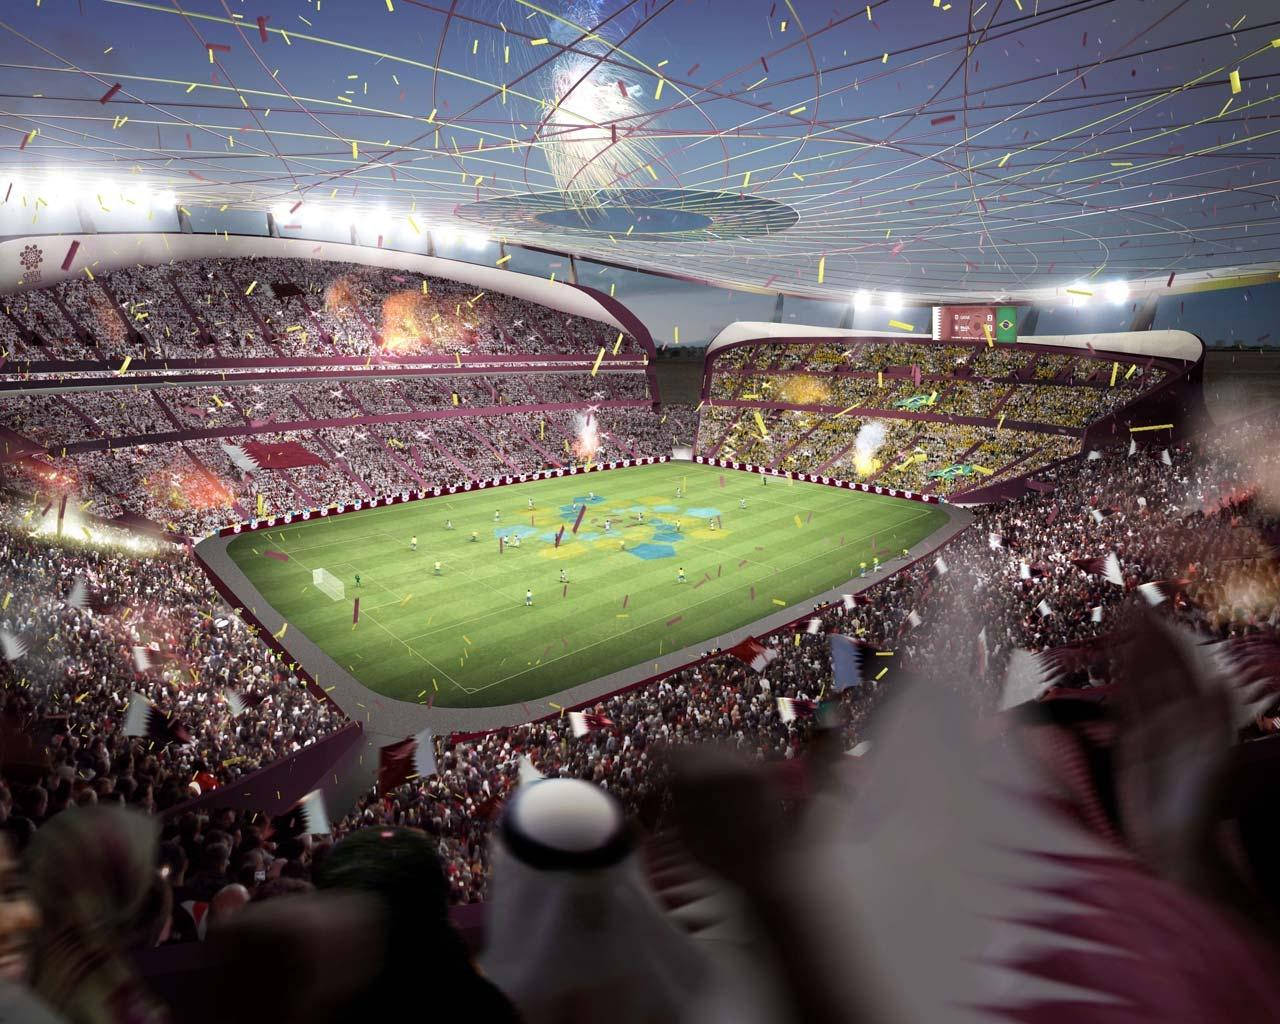 Download Lusail Stadium Interiors Fifa World Cup 2022 Wallpaper | Wallpapers .com